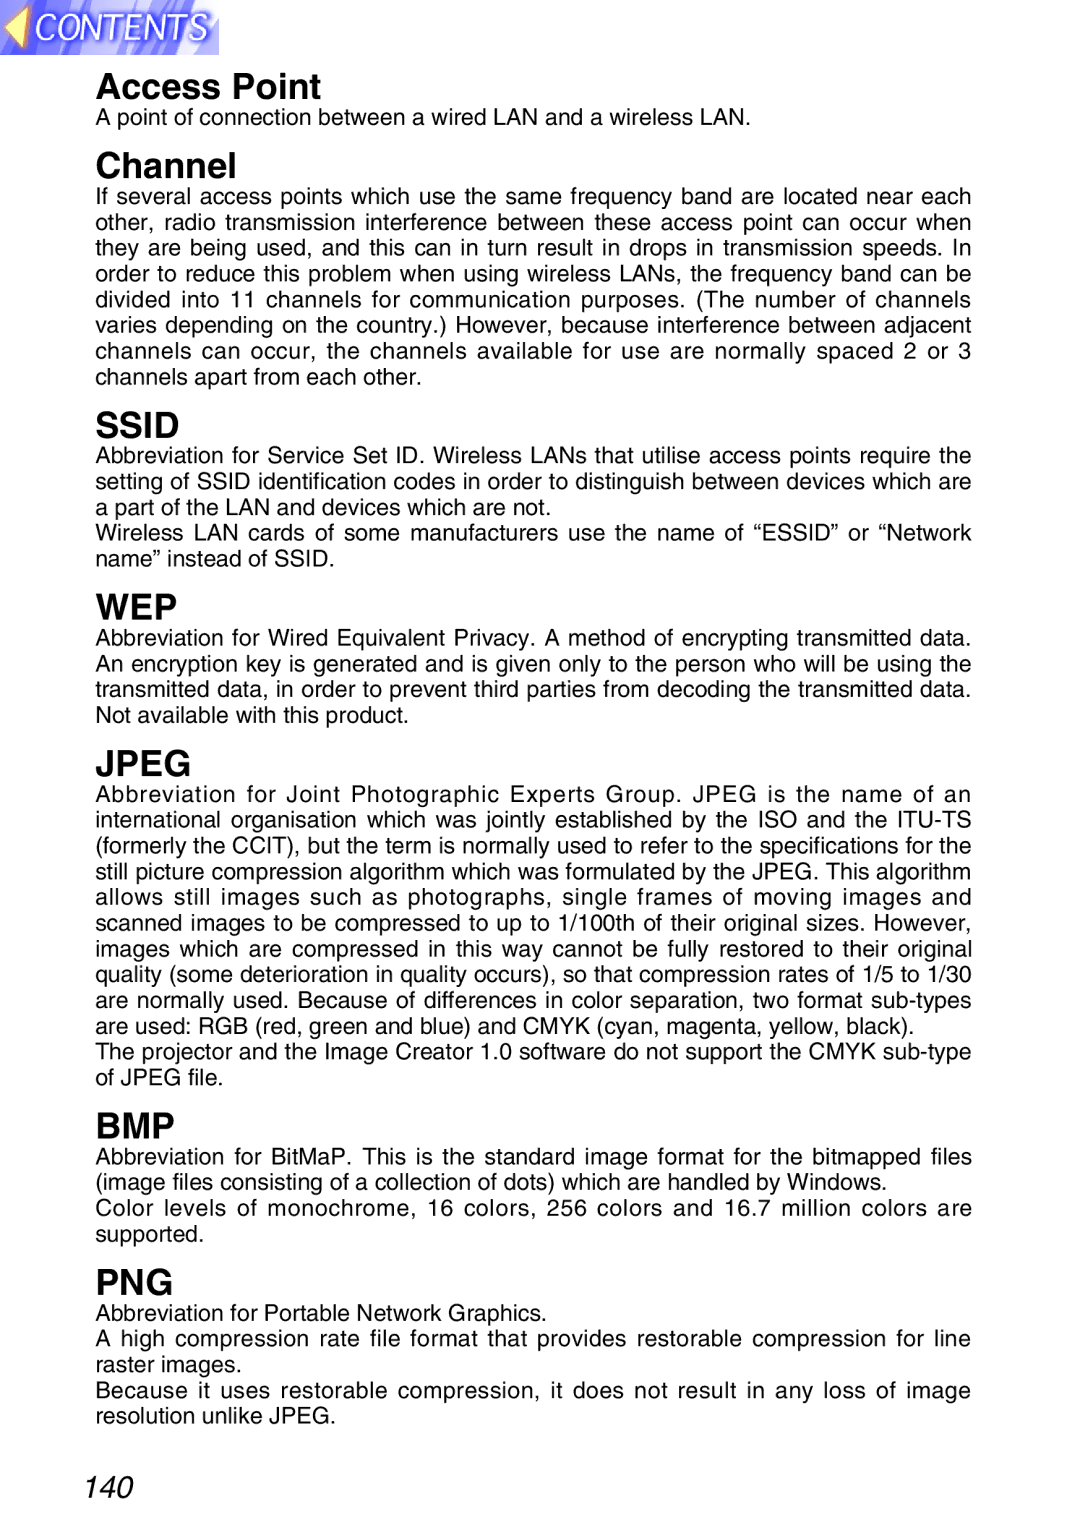 Panasonic TQBH9003-6, PT-L750U R manual Ssid, Jpeg, Bmp, Png 